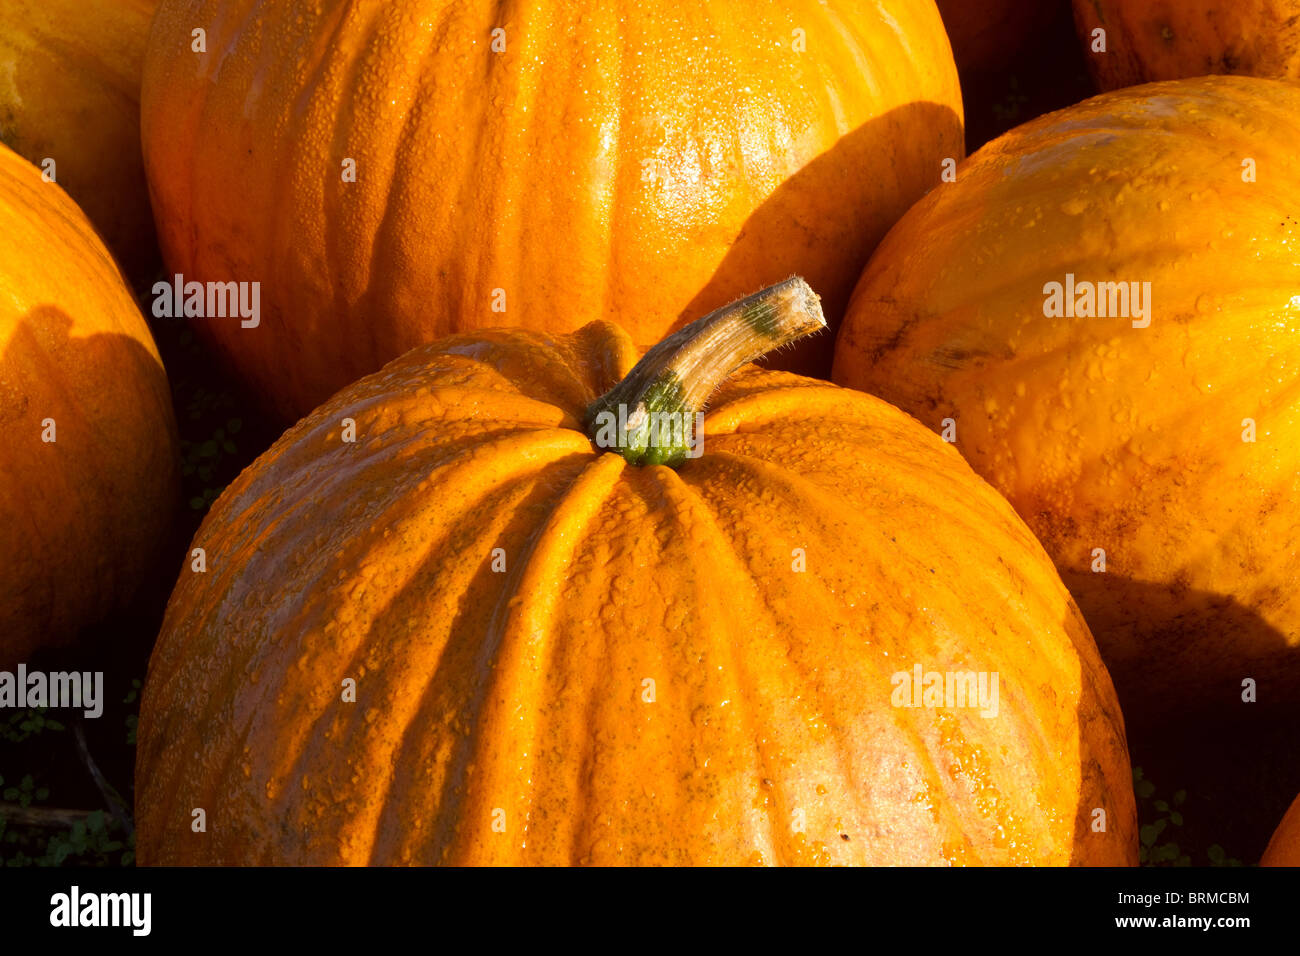 English Pumpkins grown at Market Garden, Tarleton, Southport, Lancashire, UK Stock Photo